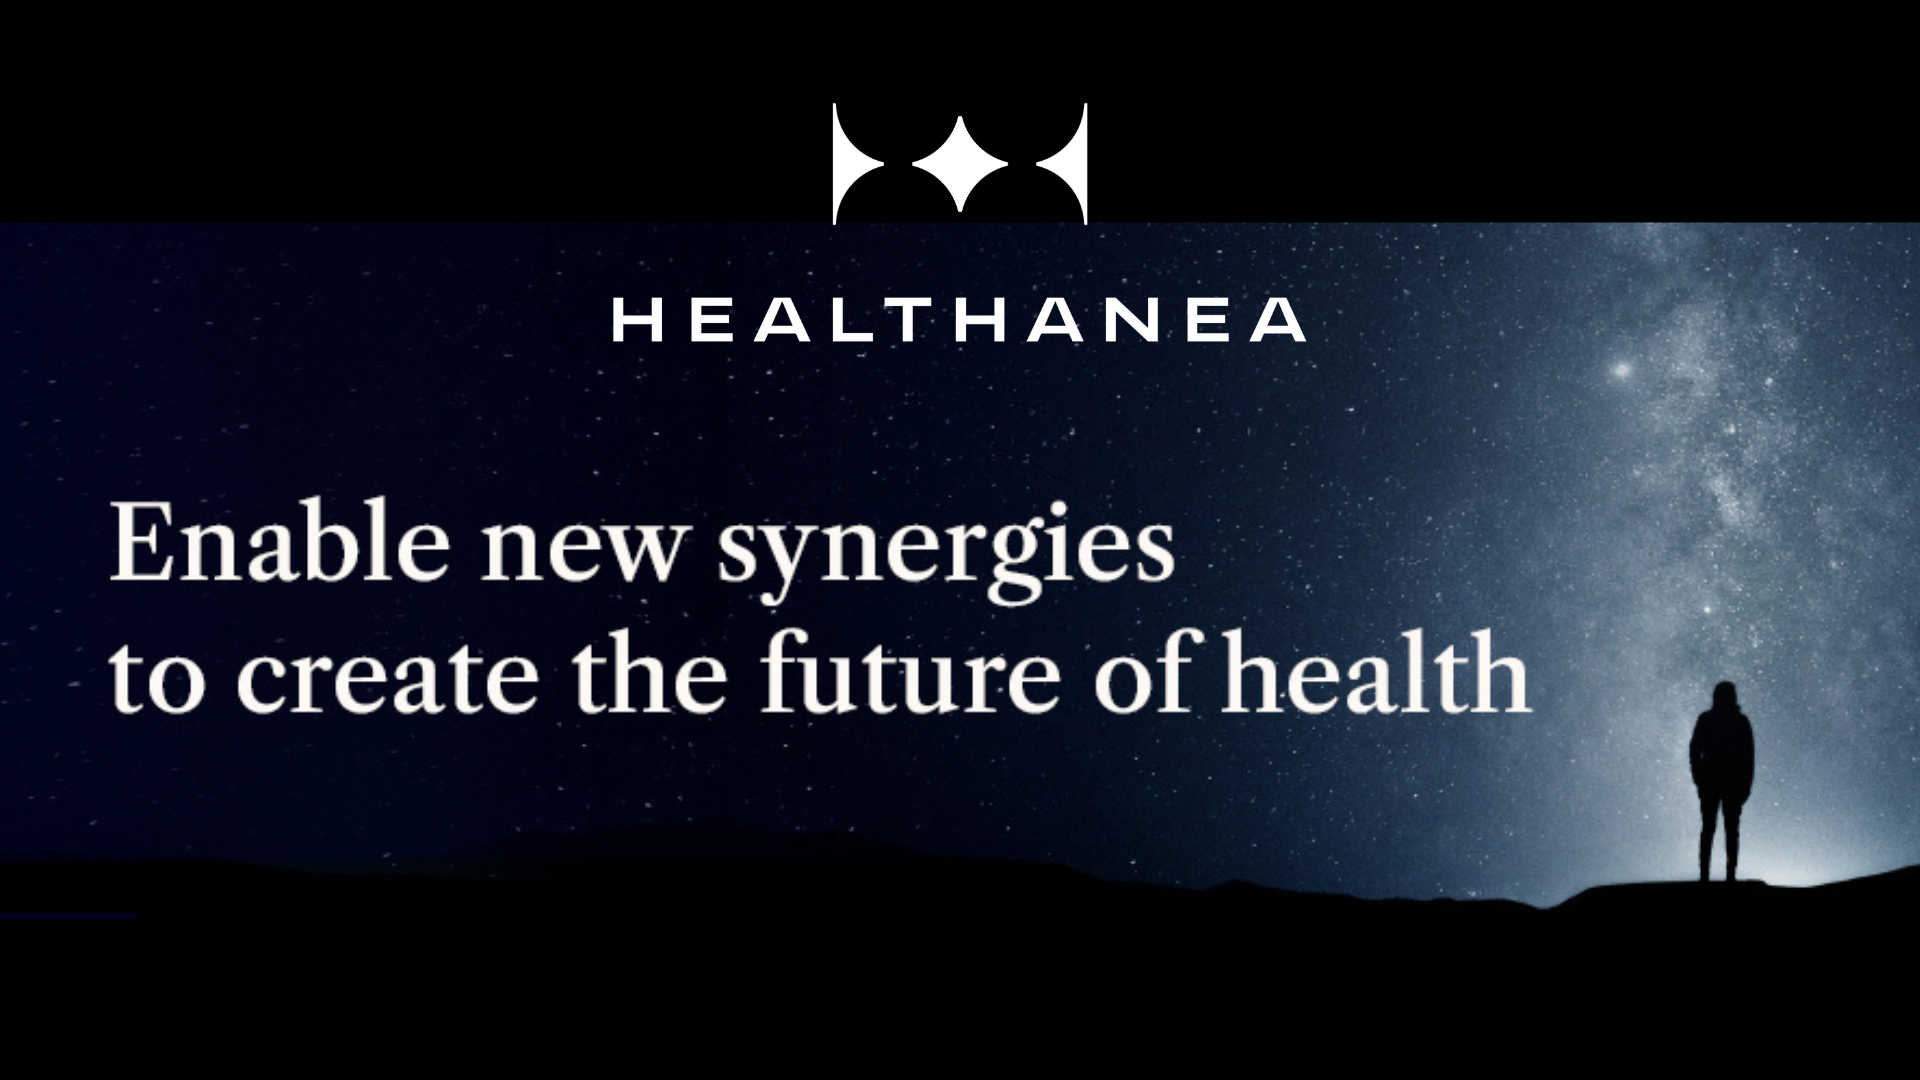 Meet the new healthcare platform Healthanea - #BHHMembersInitiatives